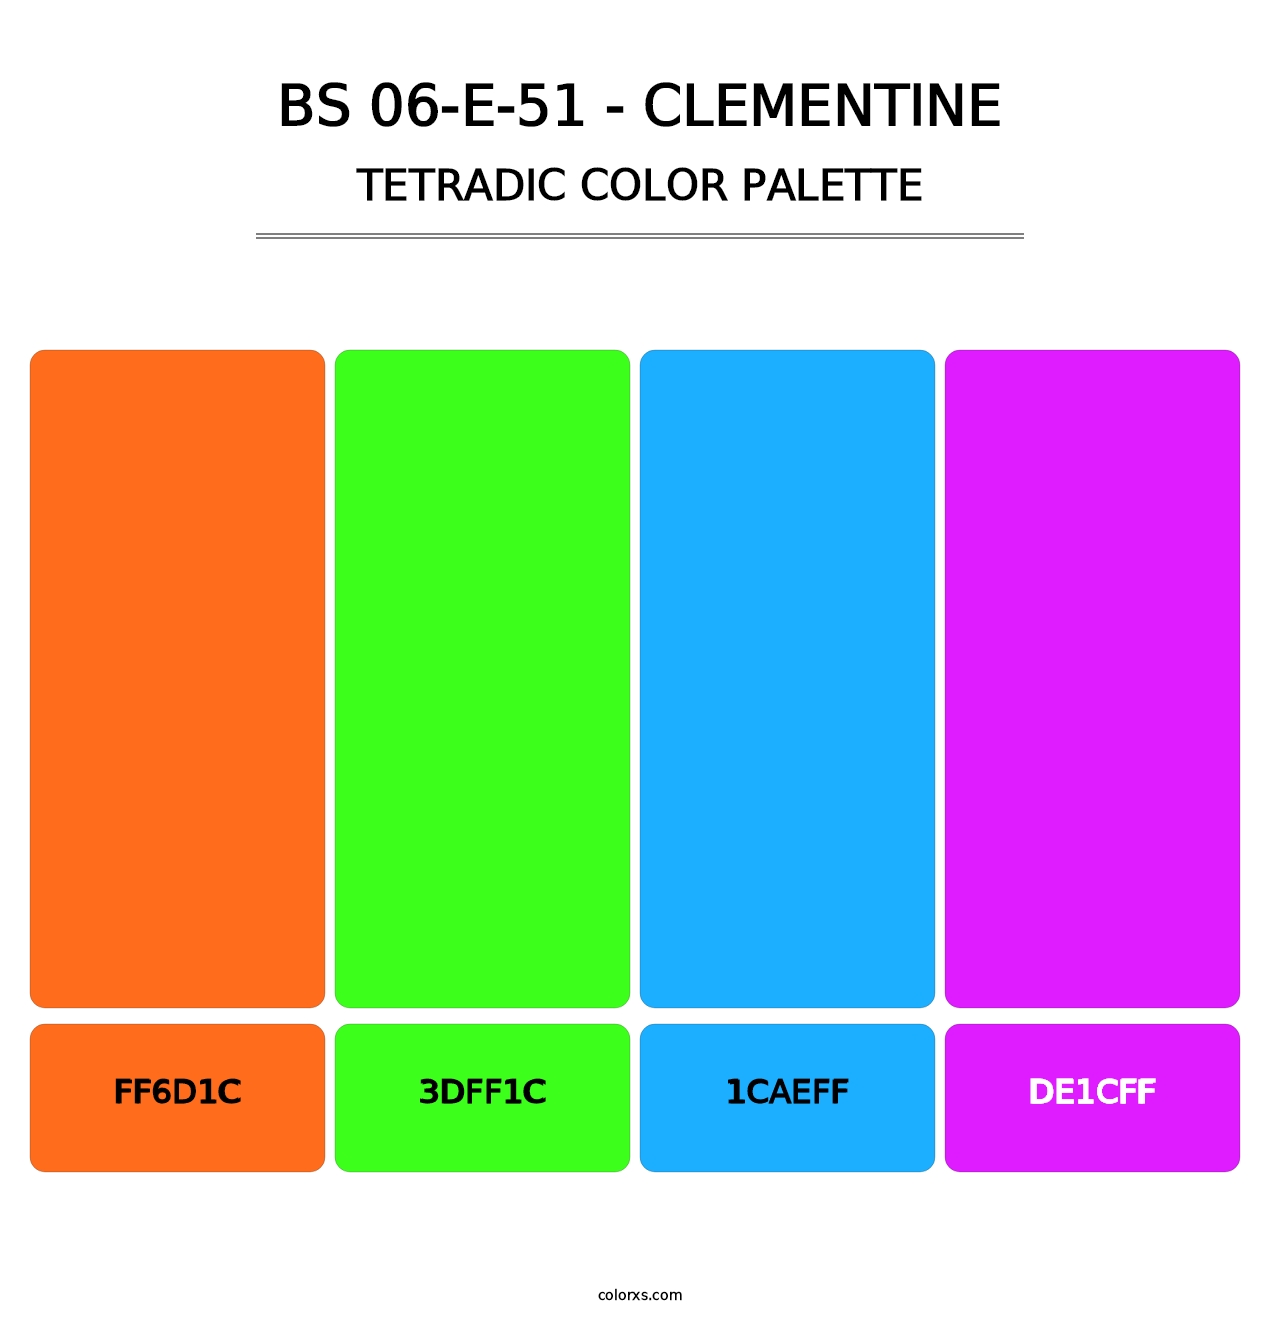 BS 06-E-51 - Clementine - Tetradic Color Palette